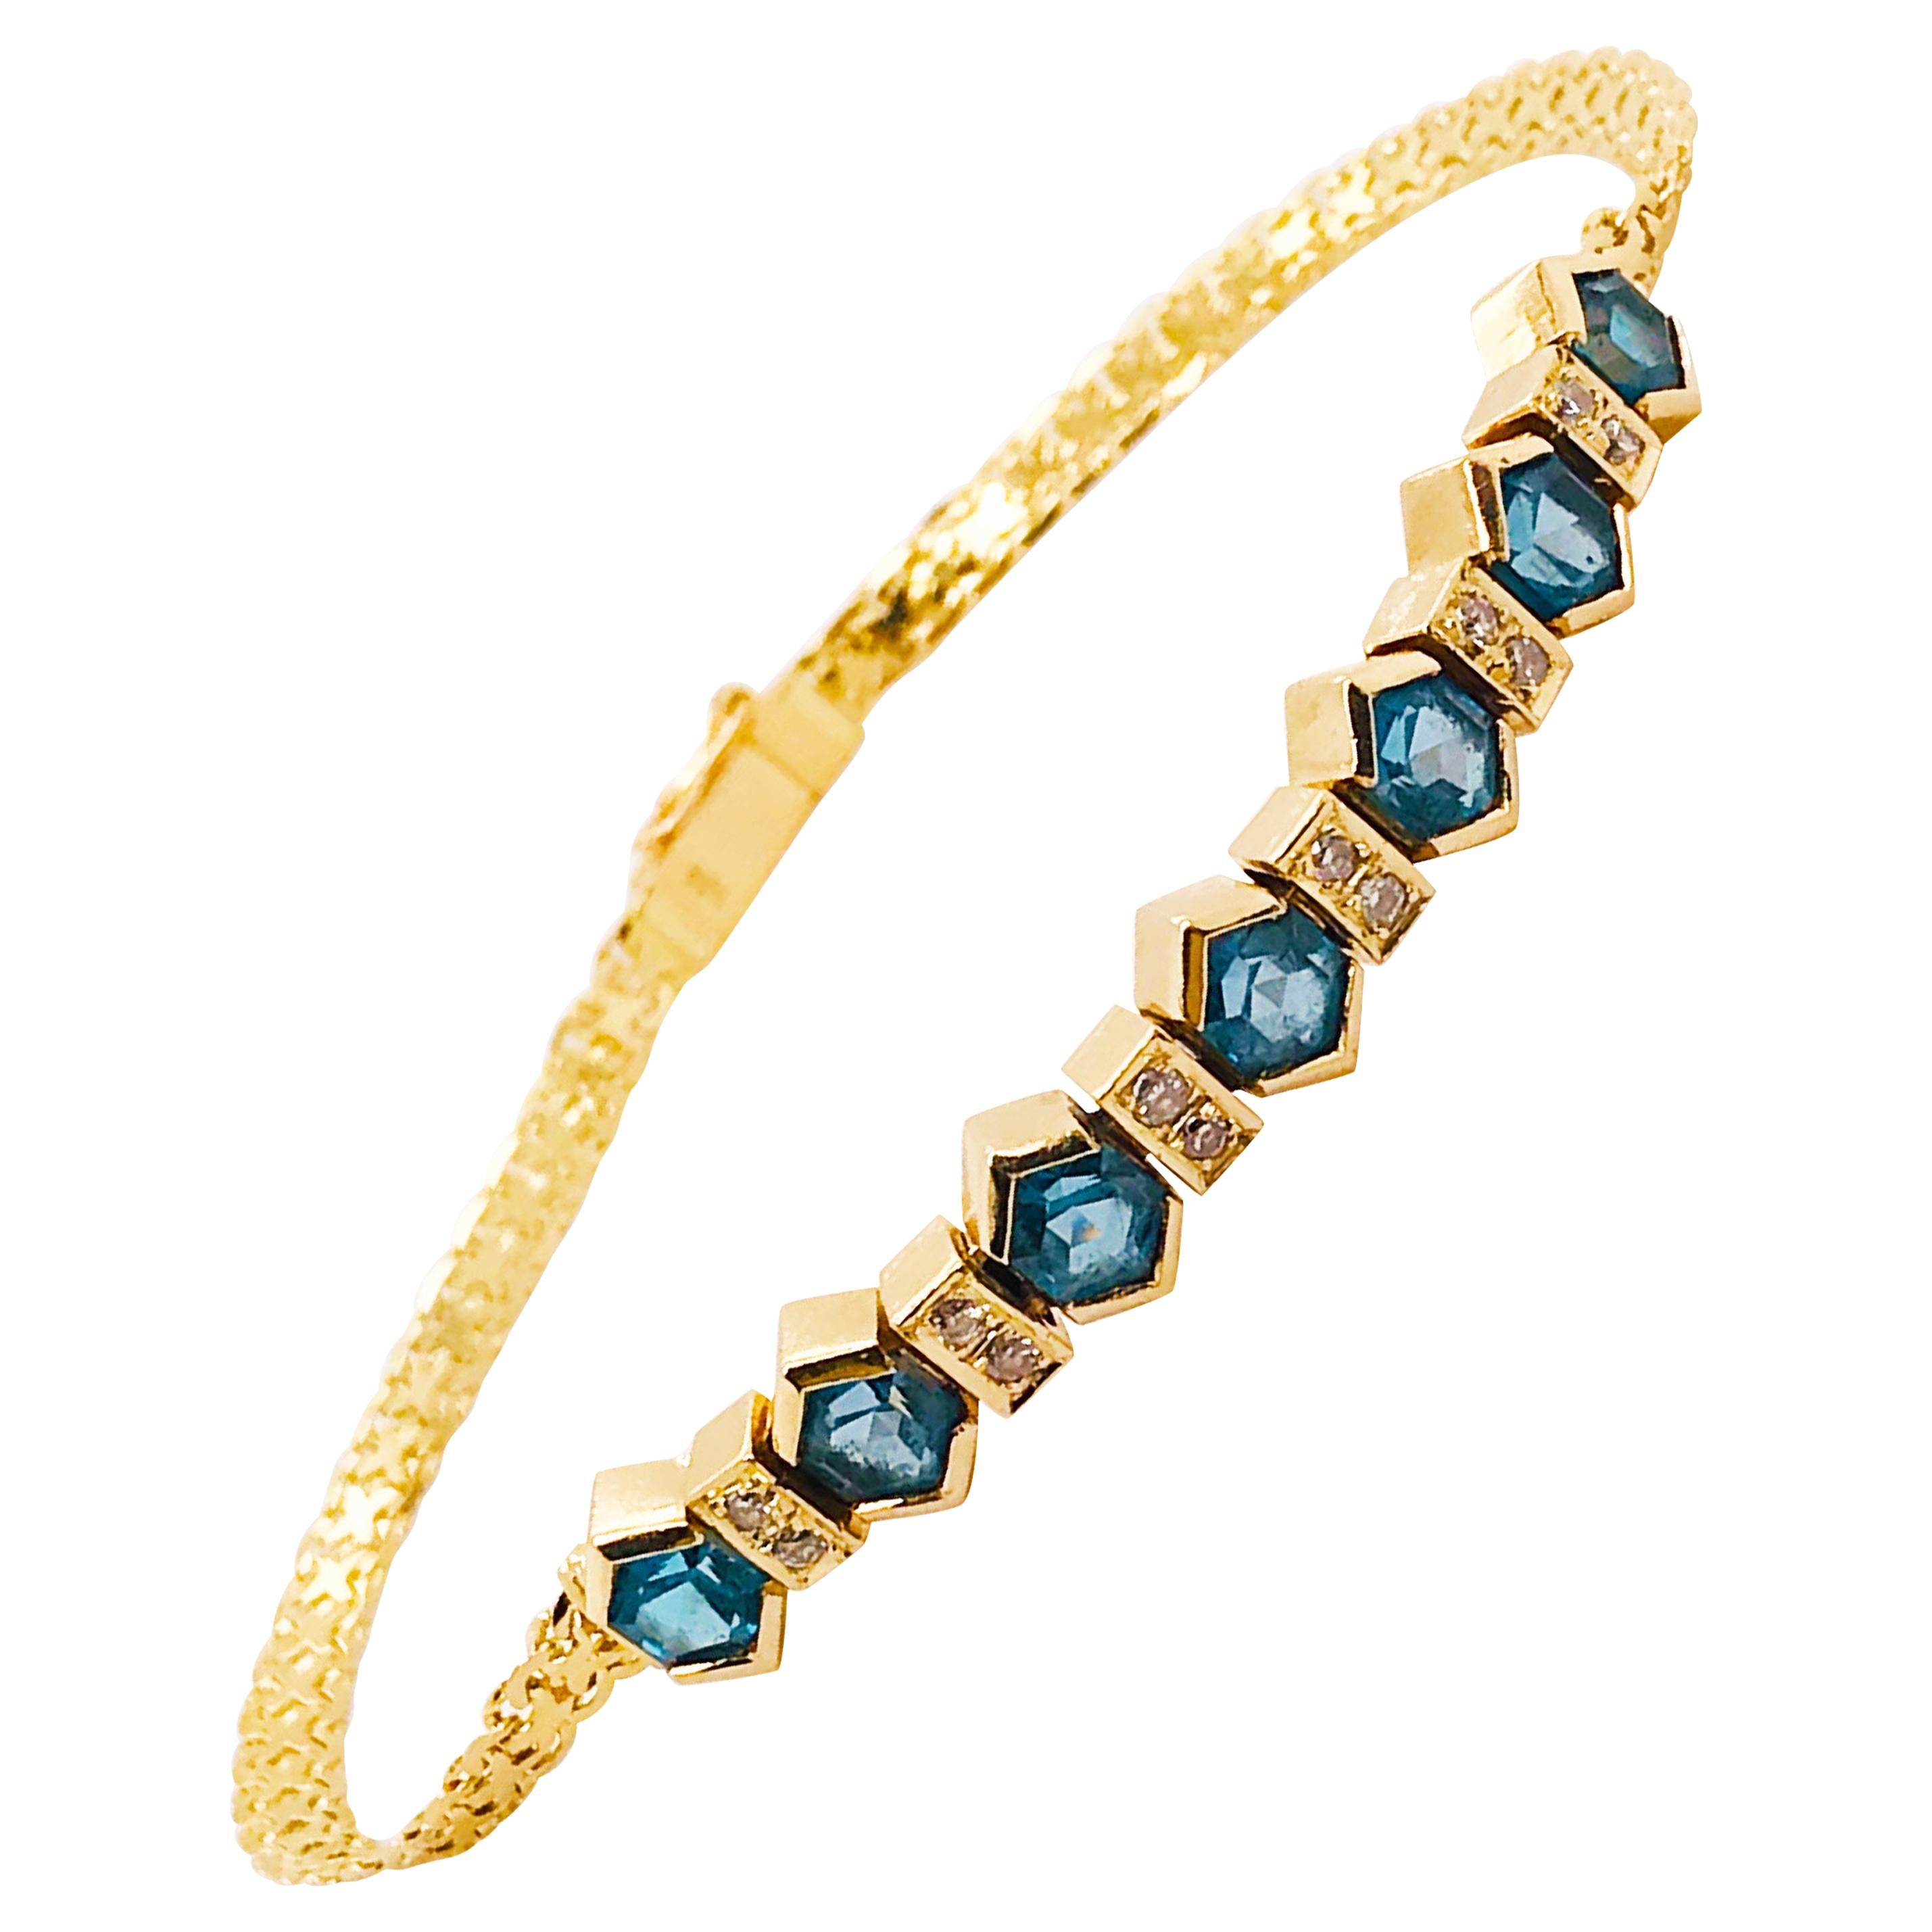 Deep Blue Tourmaline and White Diamond Bracelet in 14 Karat Yellow Gold